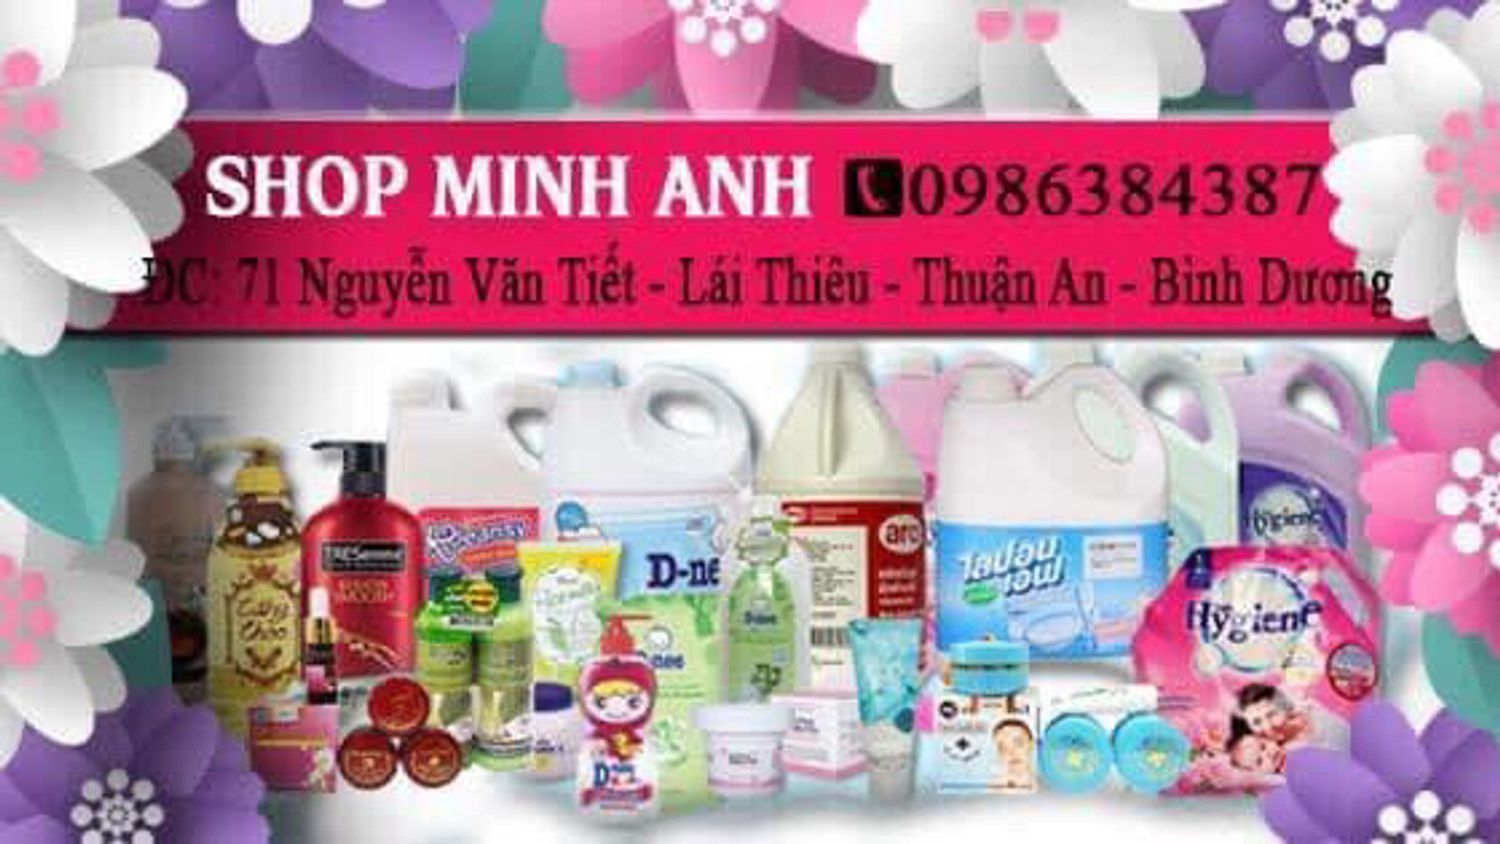 Shop Minh Anh